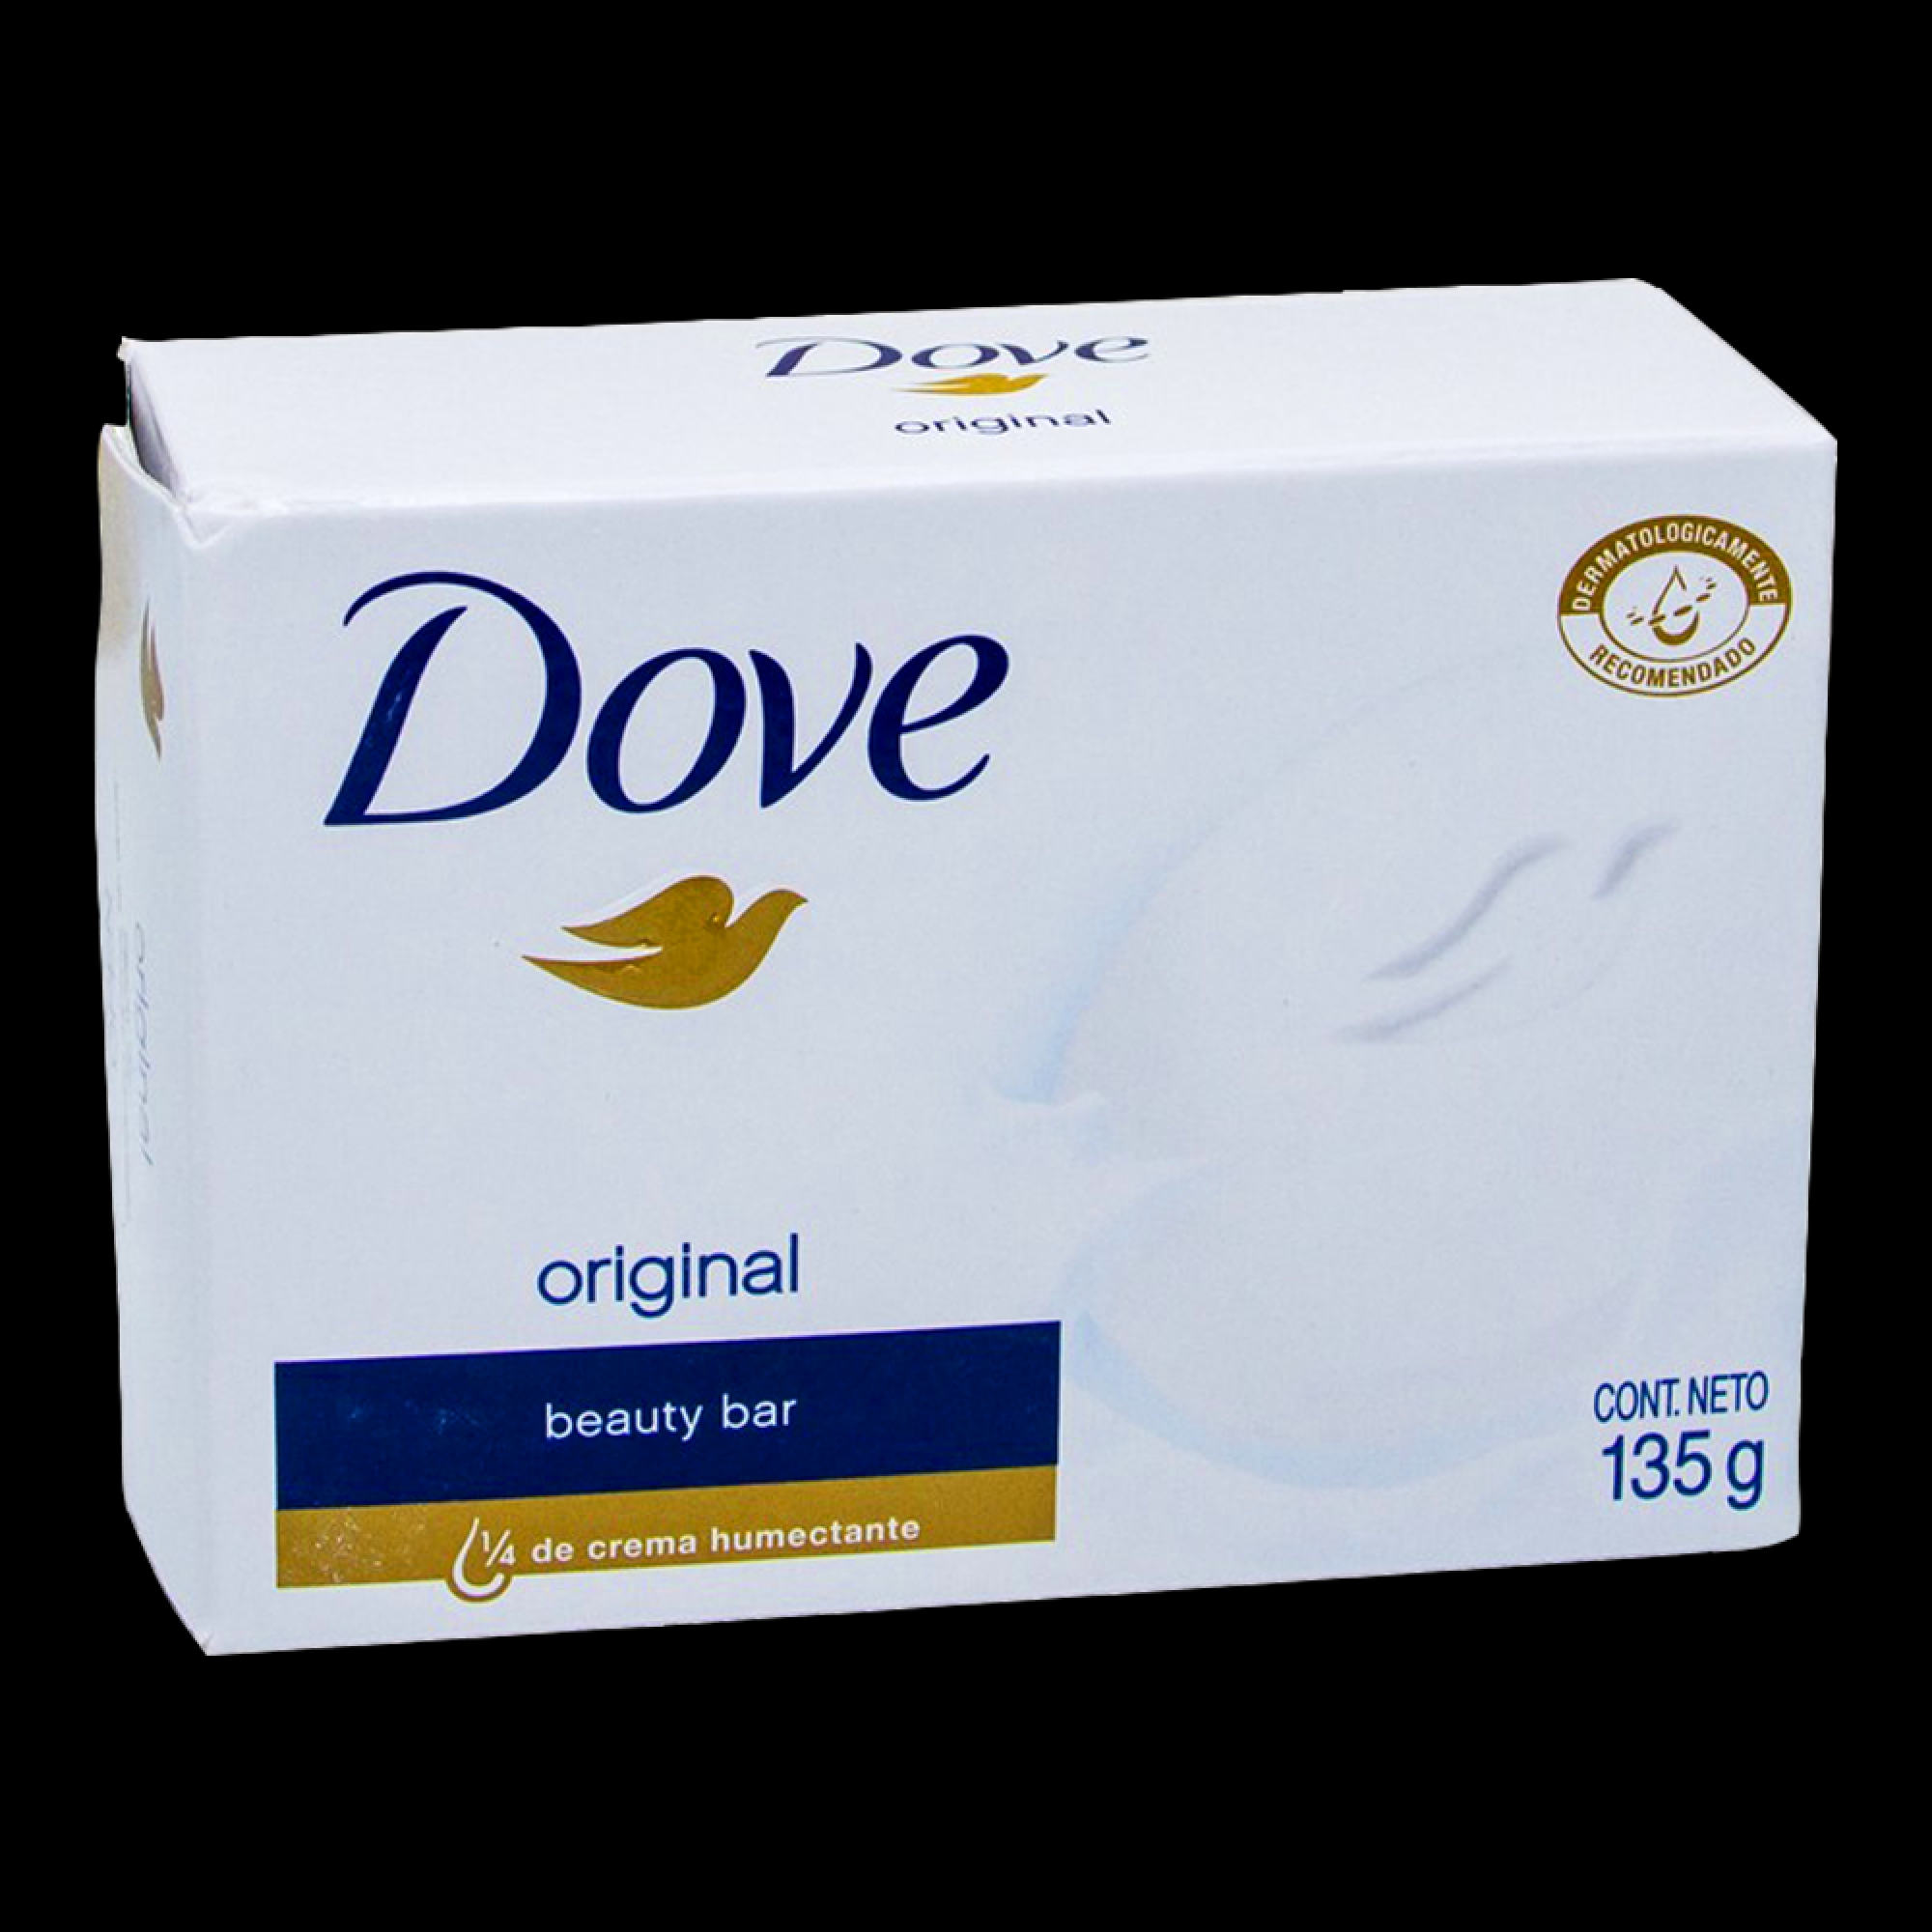 Dove Soap Original Beuty Bar 135g